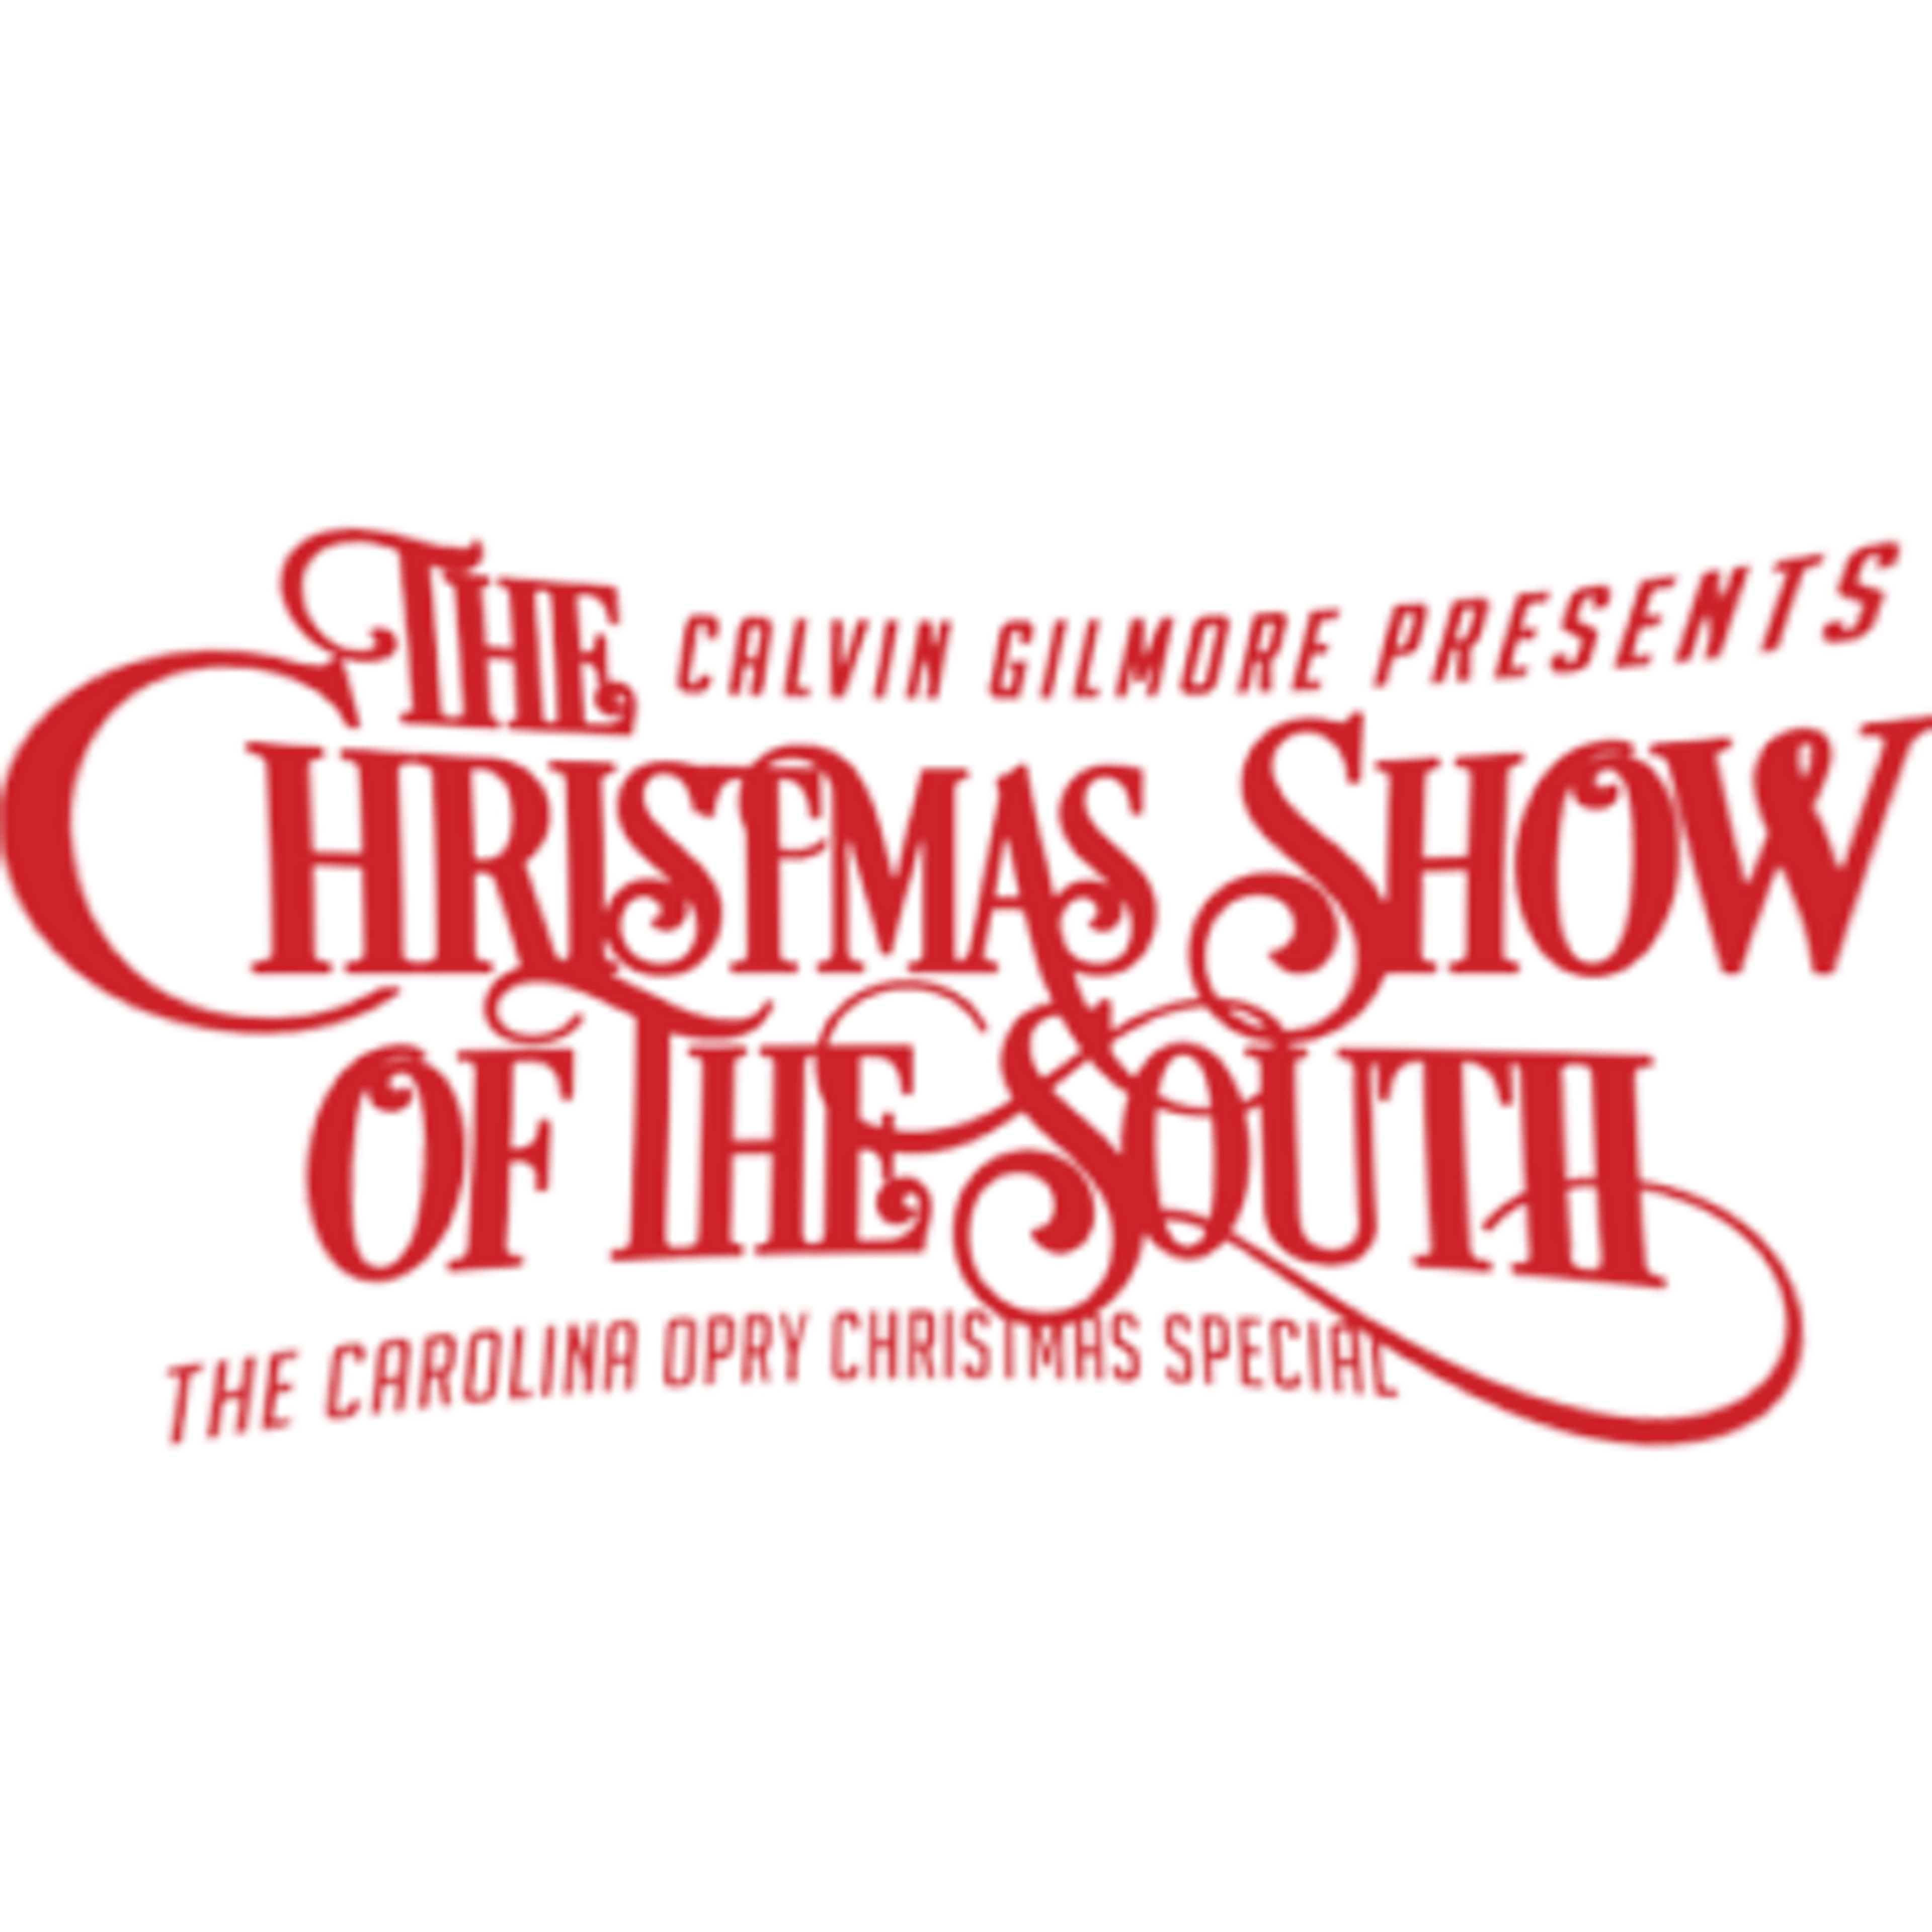 Carolina Opry Christmas Special, The